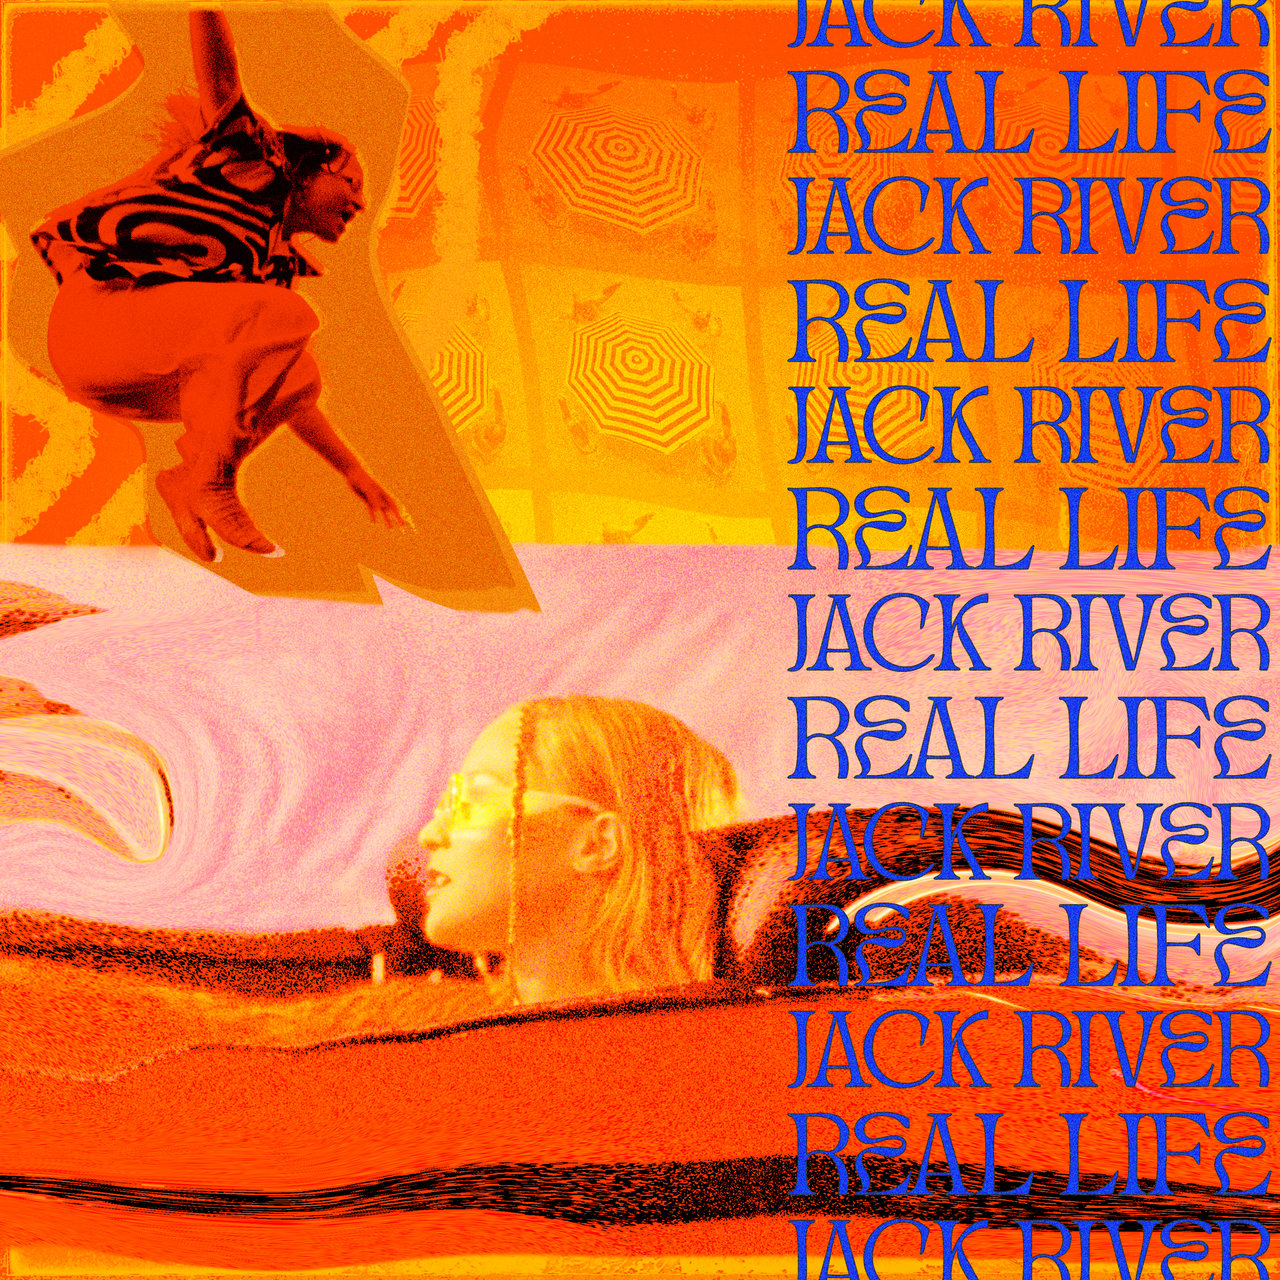 Jack River Real Life cover artwork